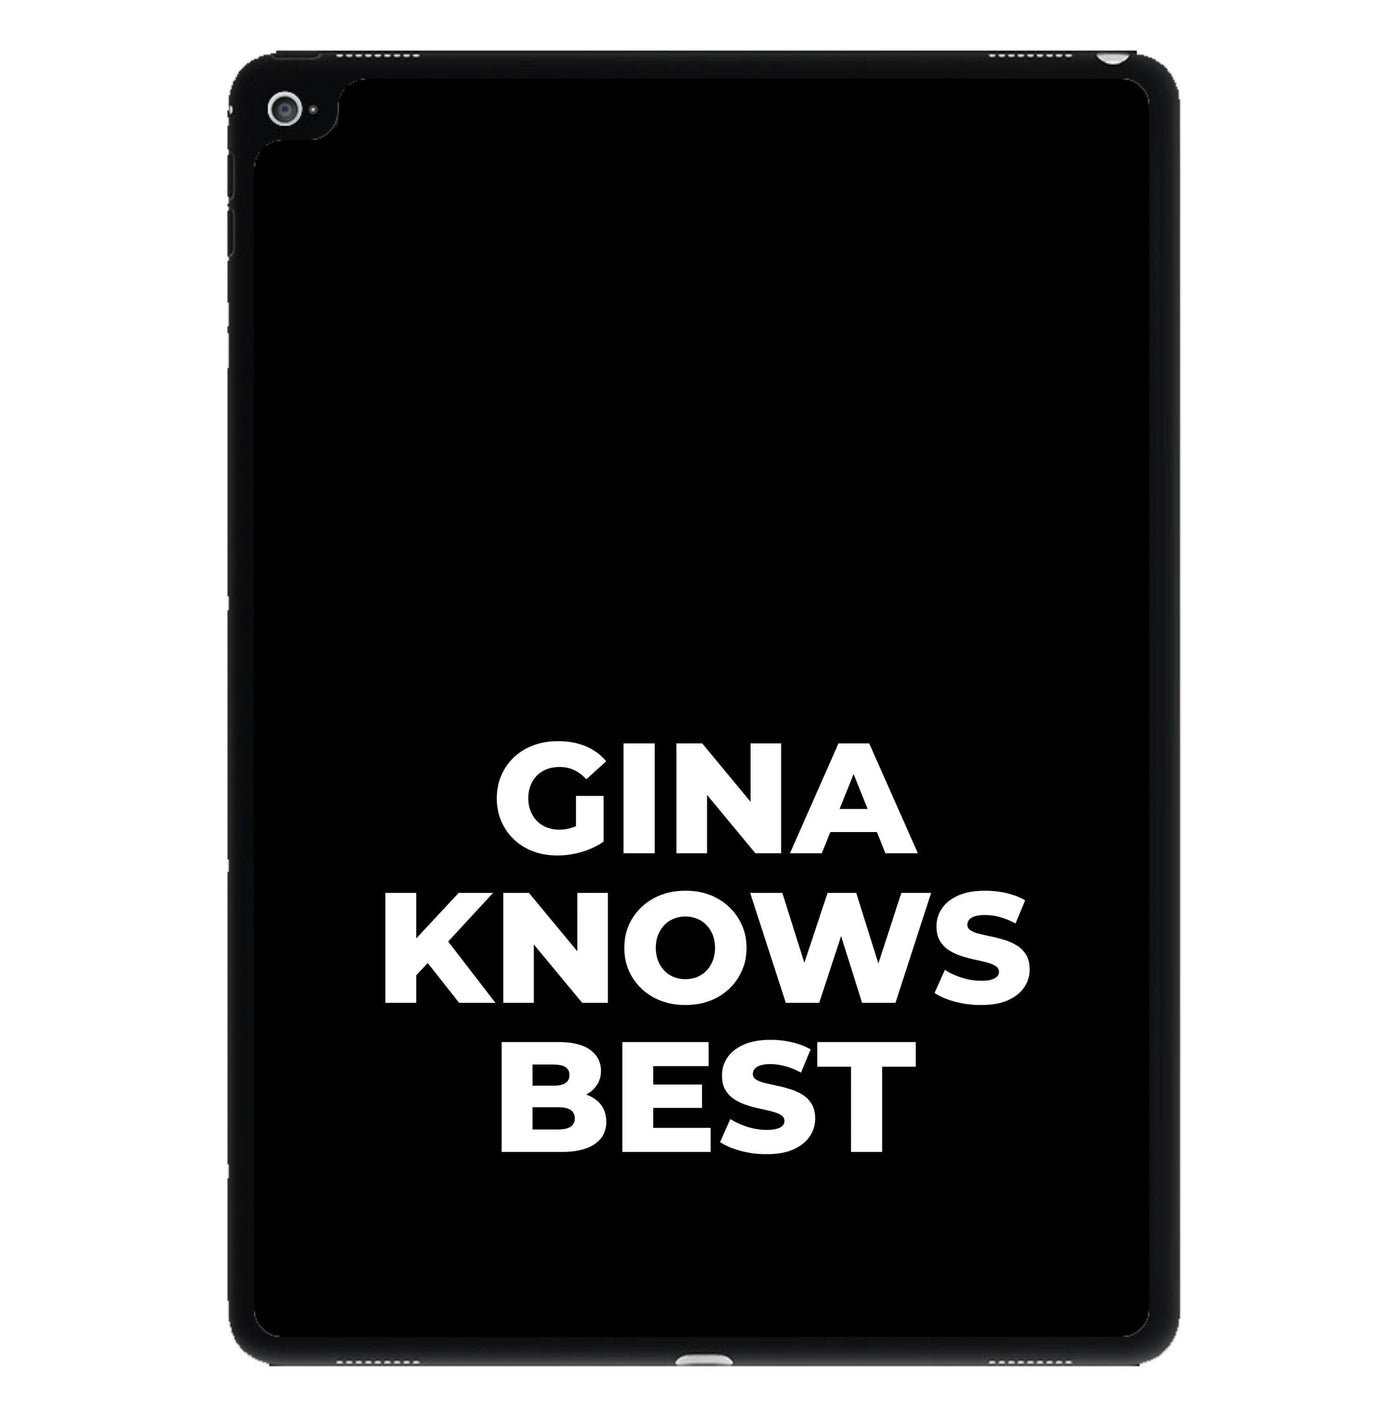 Gina Knows Best - Brooklyn Nine-Nine iPad Case